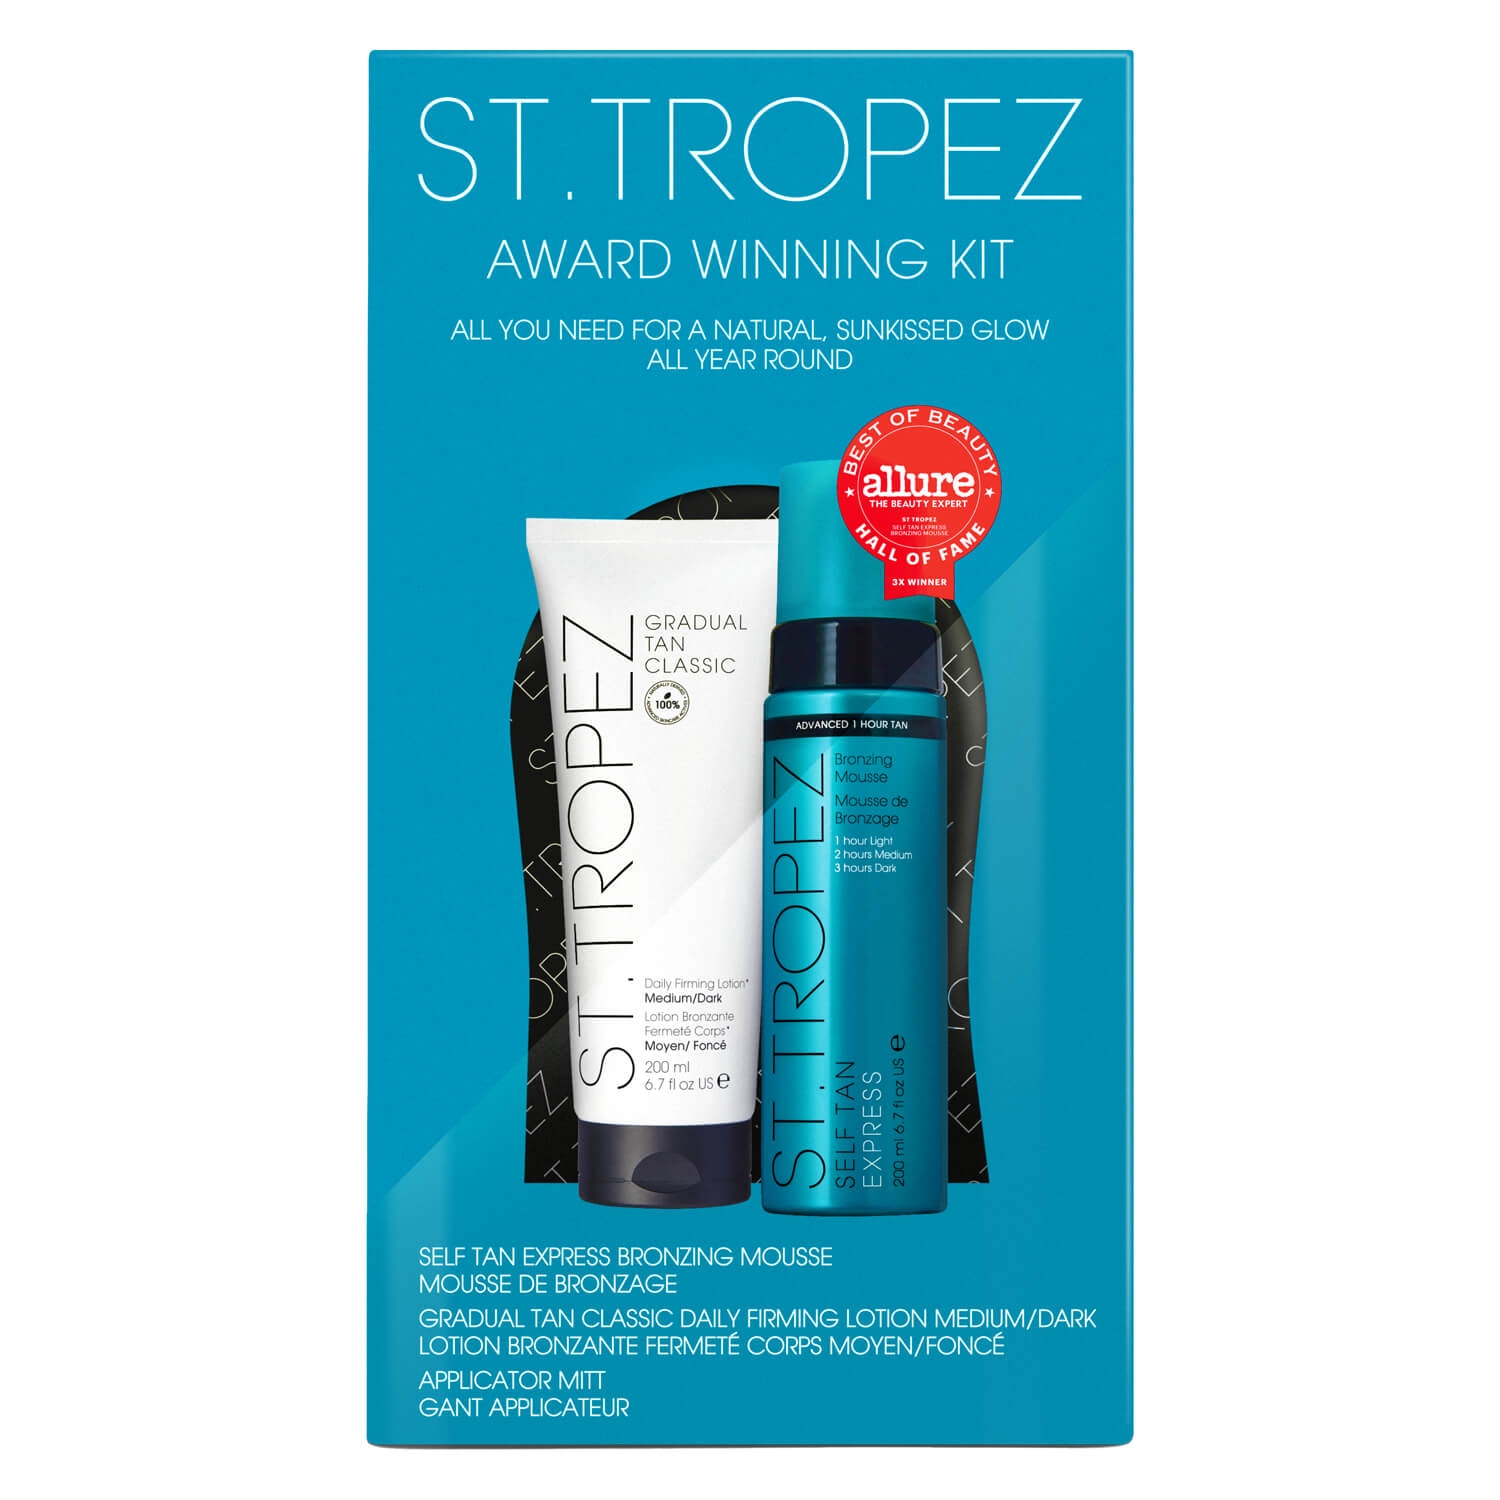 Product image from St.Tropez - Award Winning Kit